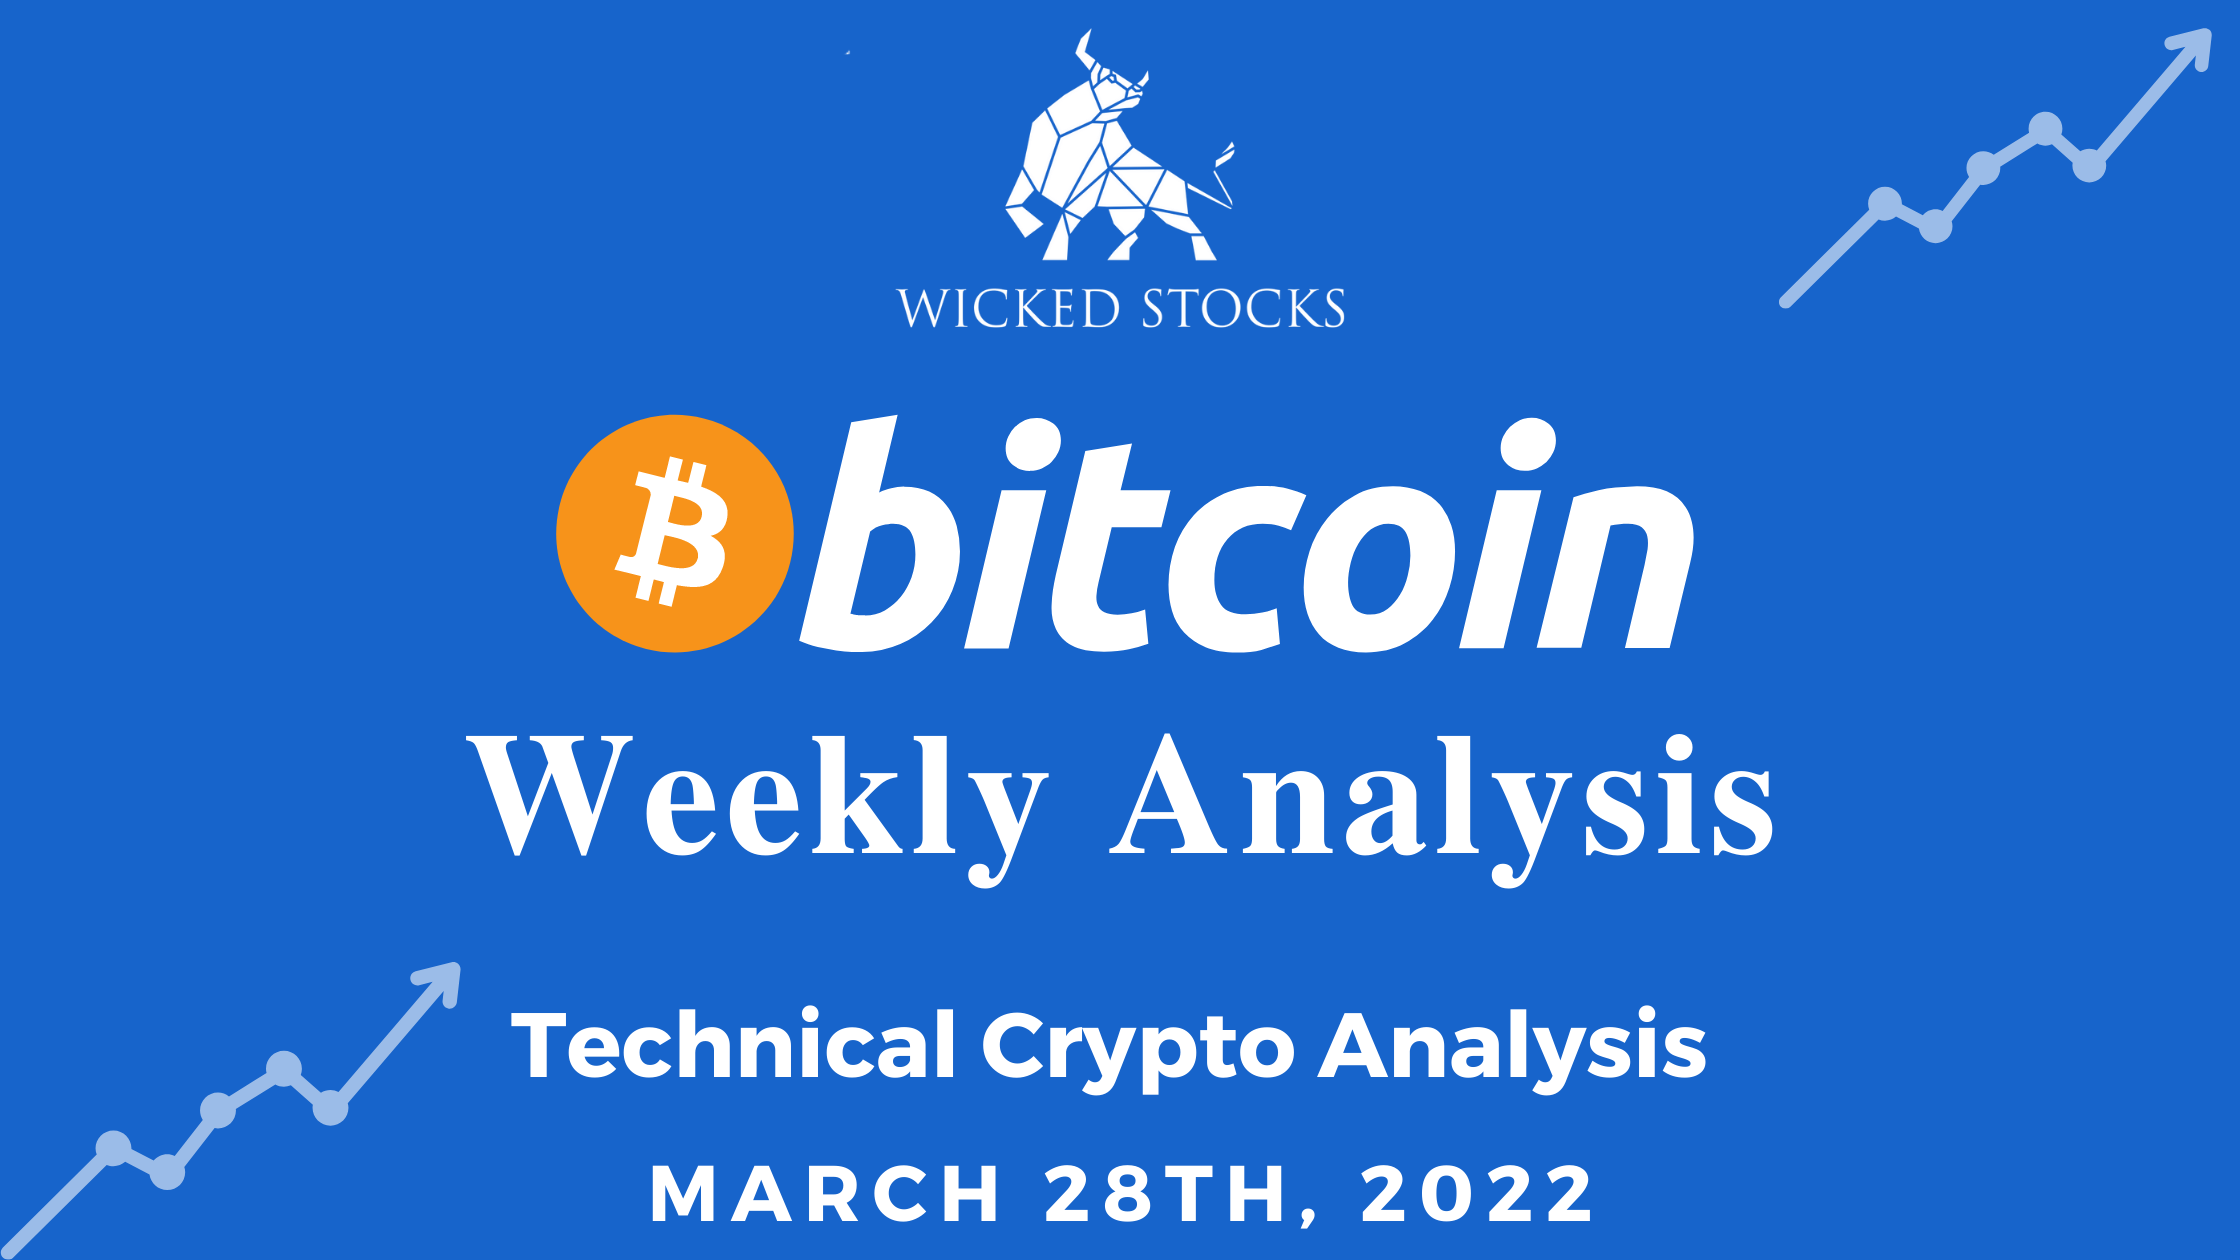 Bitcoin Weekly Analysis 3/28/22